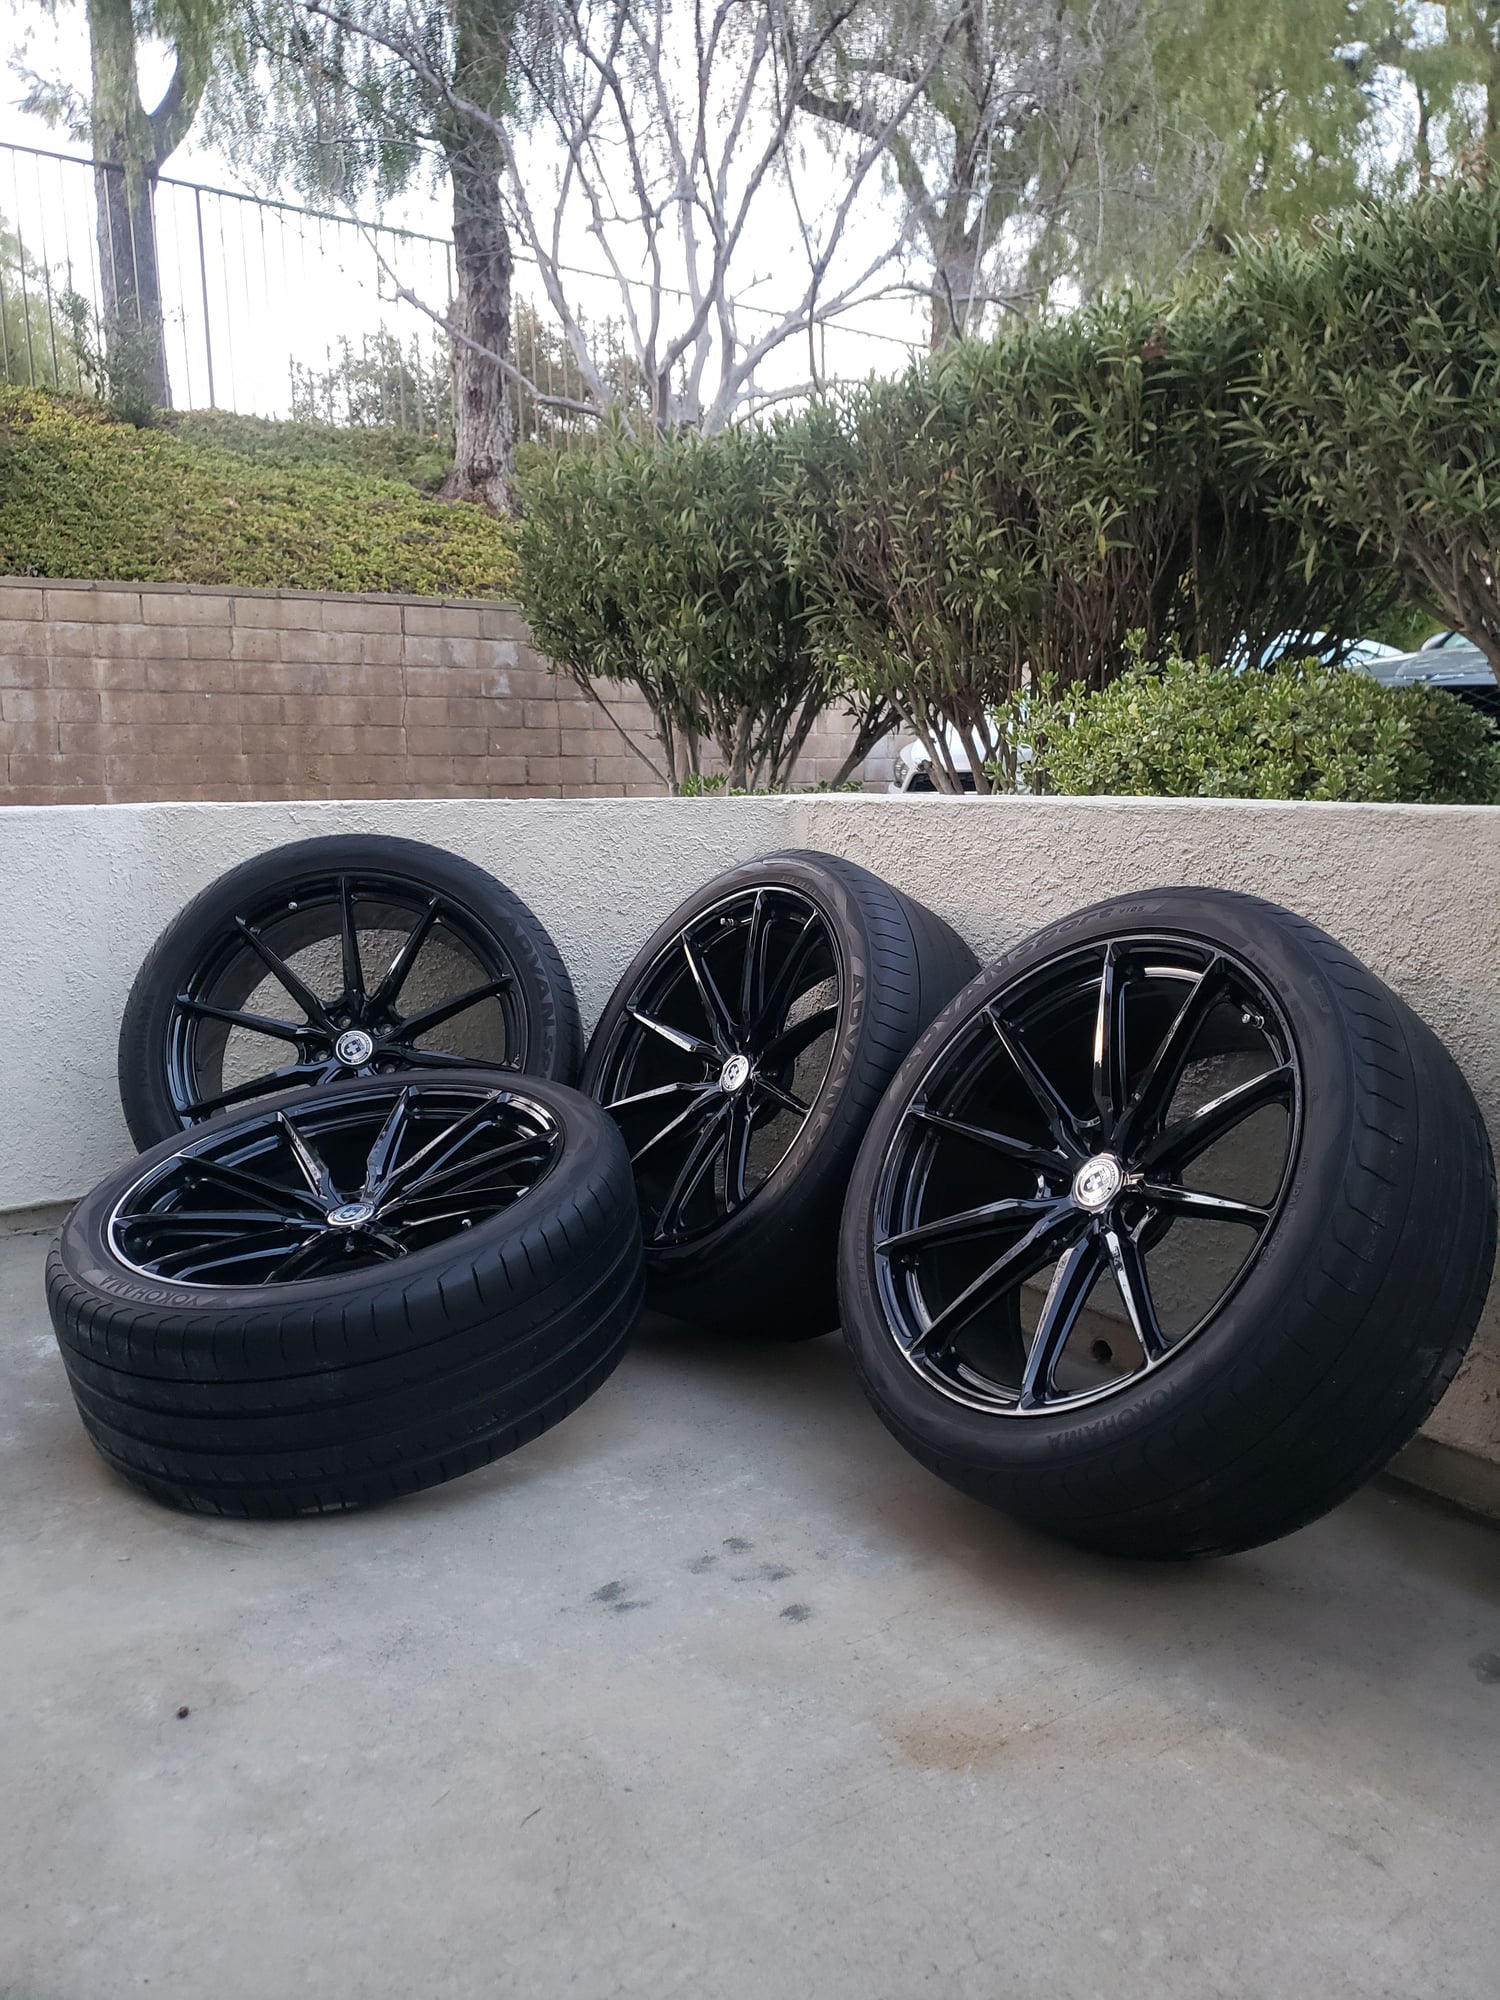 Wheels and Tires/Axles - 23" HRE/ YOKOHAMA TIRES 5X130 GWAGON - Used - All Years Mercedes-Benz GL320 - Agoura Hills, CA 91301, United States